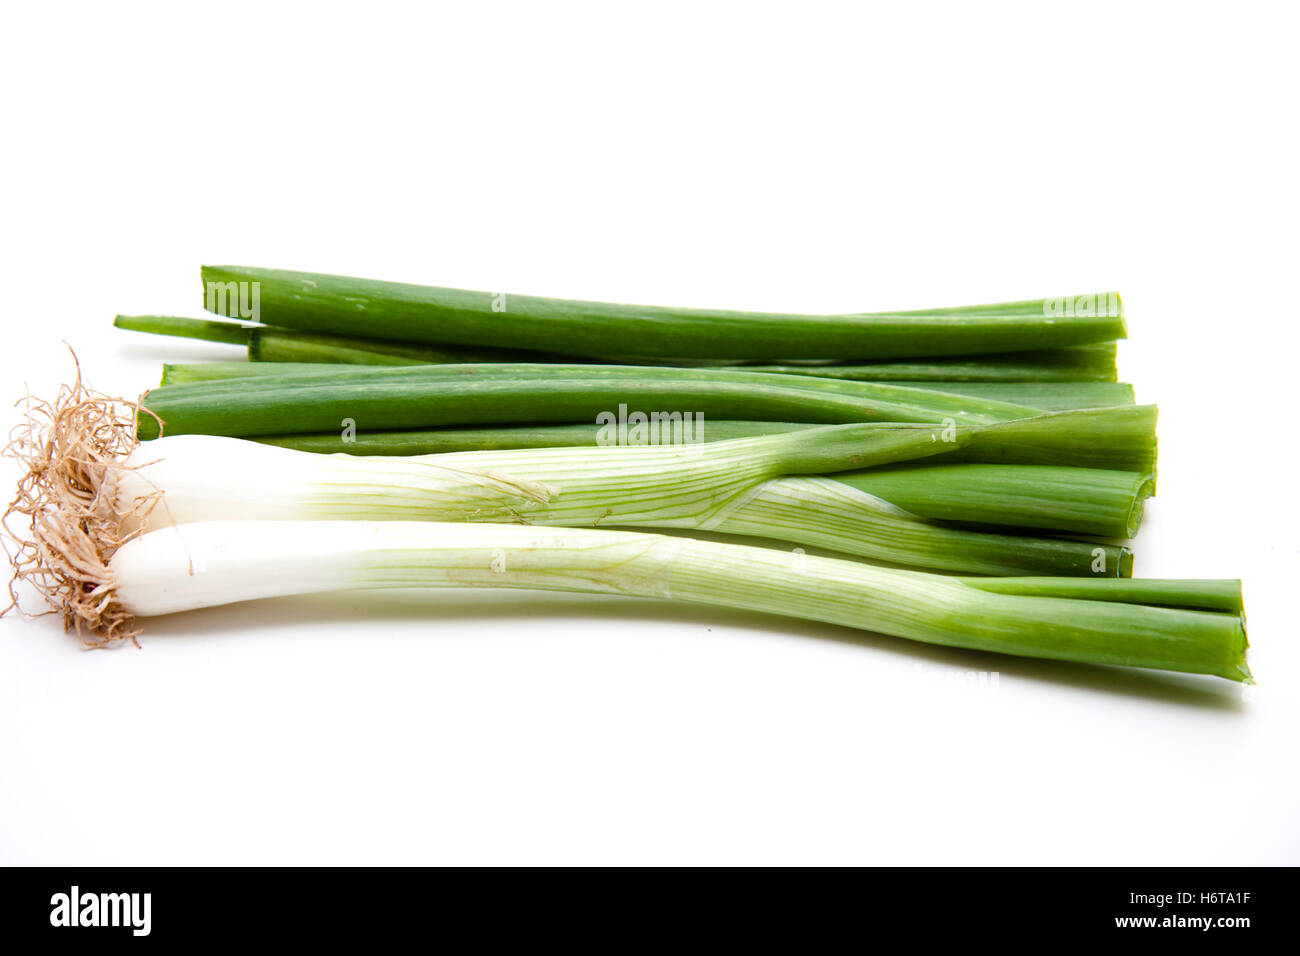 vegetable, onion, food, aliment, vegetable, raw, onion, plant, fresh, Stock Photo